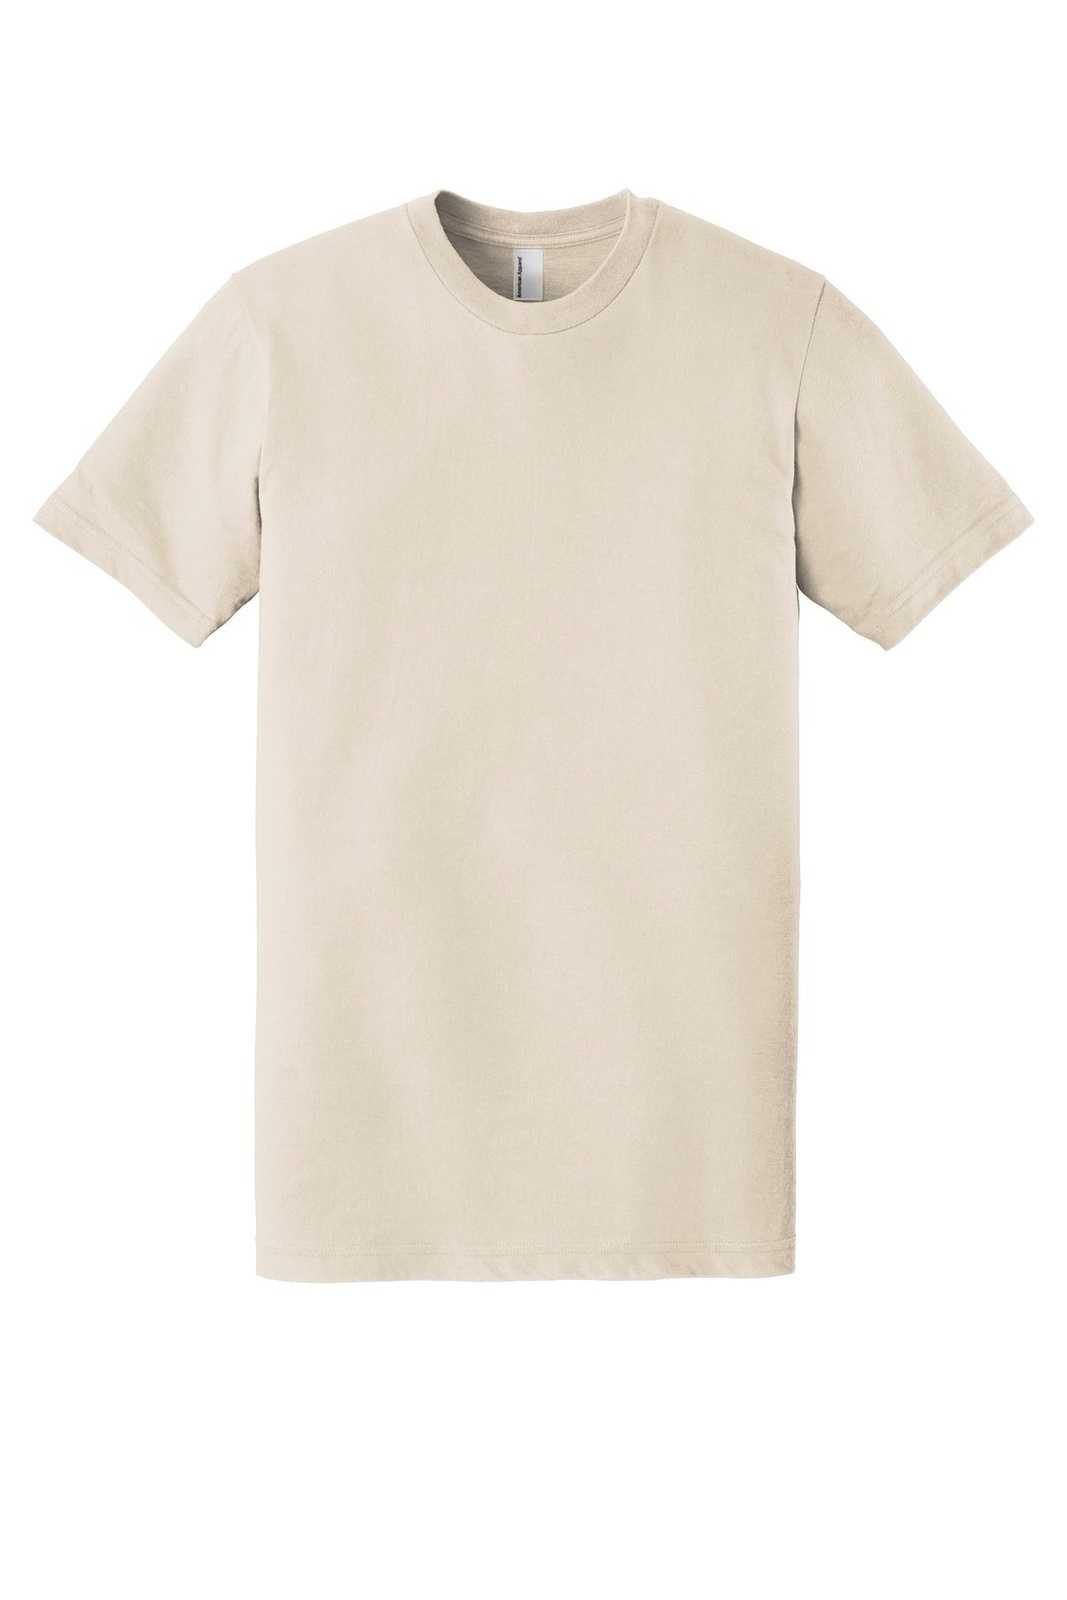 American Apparel 2001W Fine Jersey T-Shirt - Creme - HIT a Double